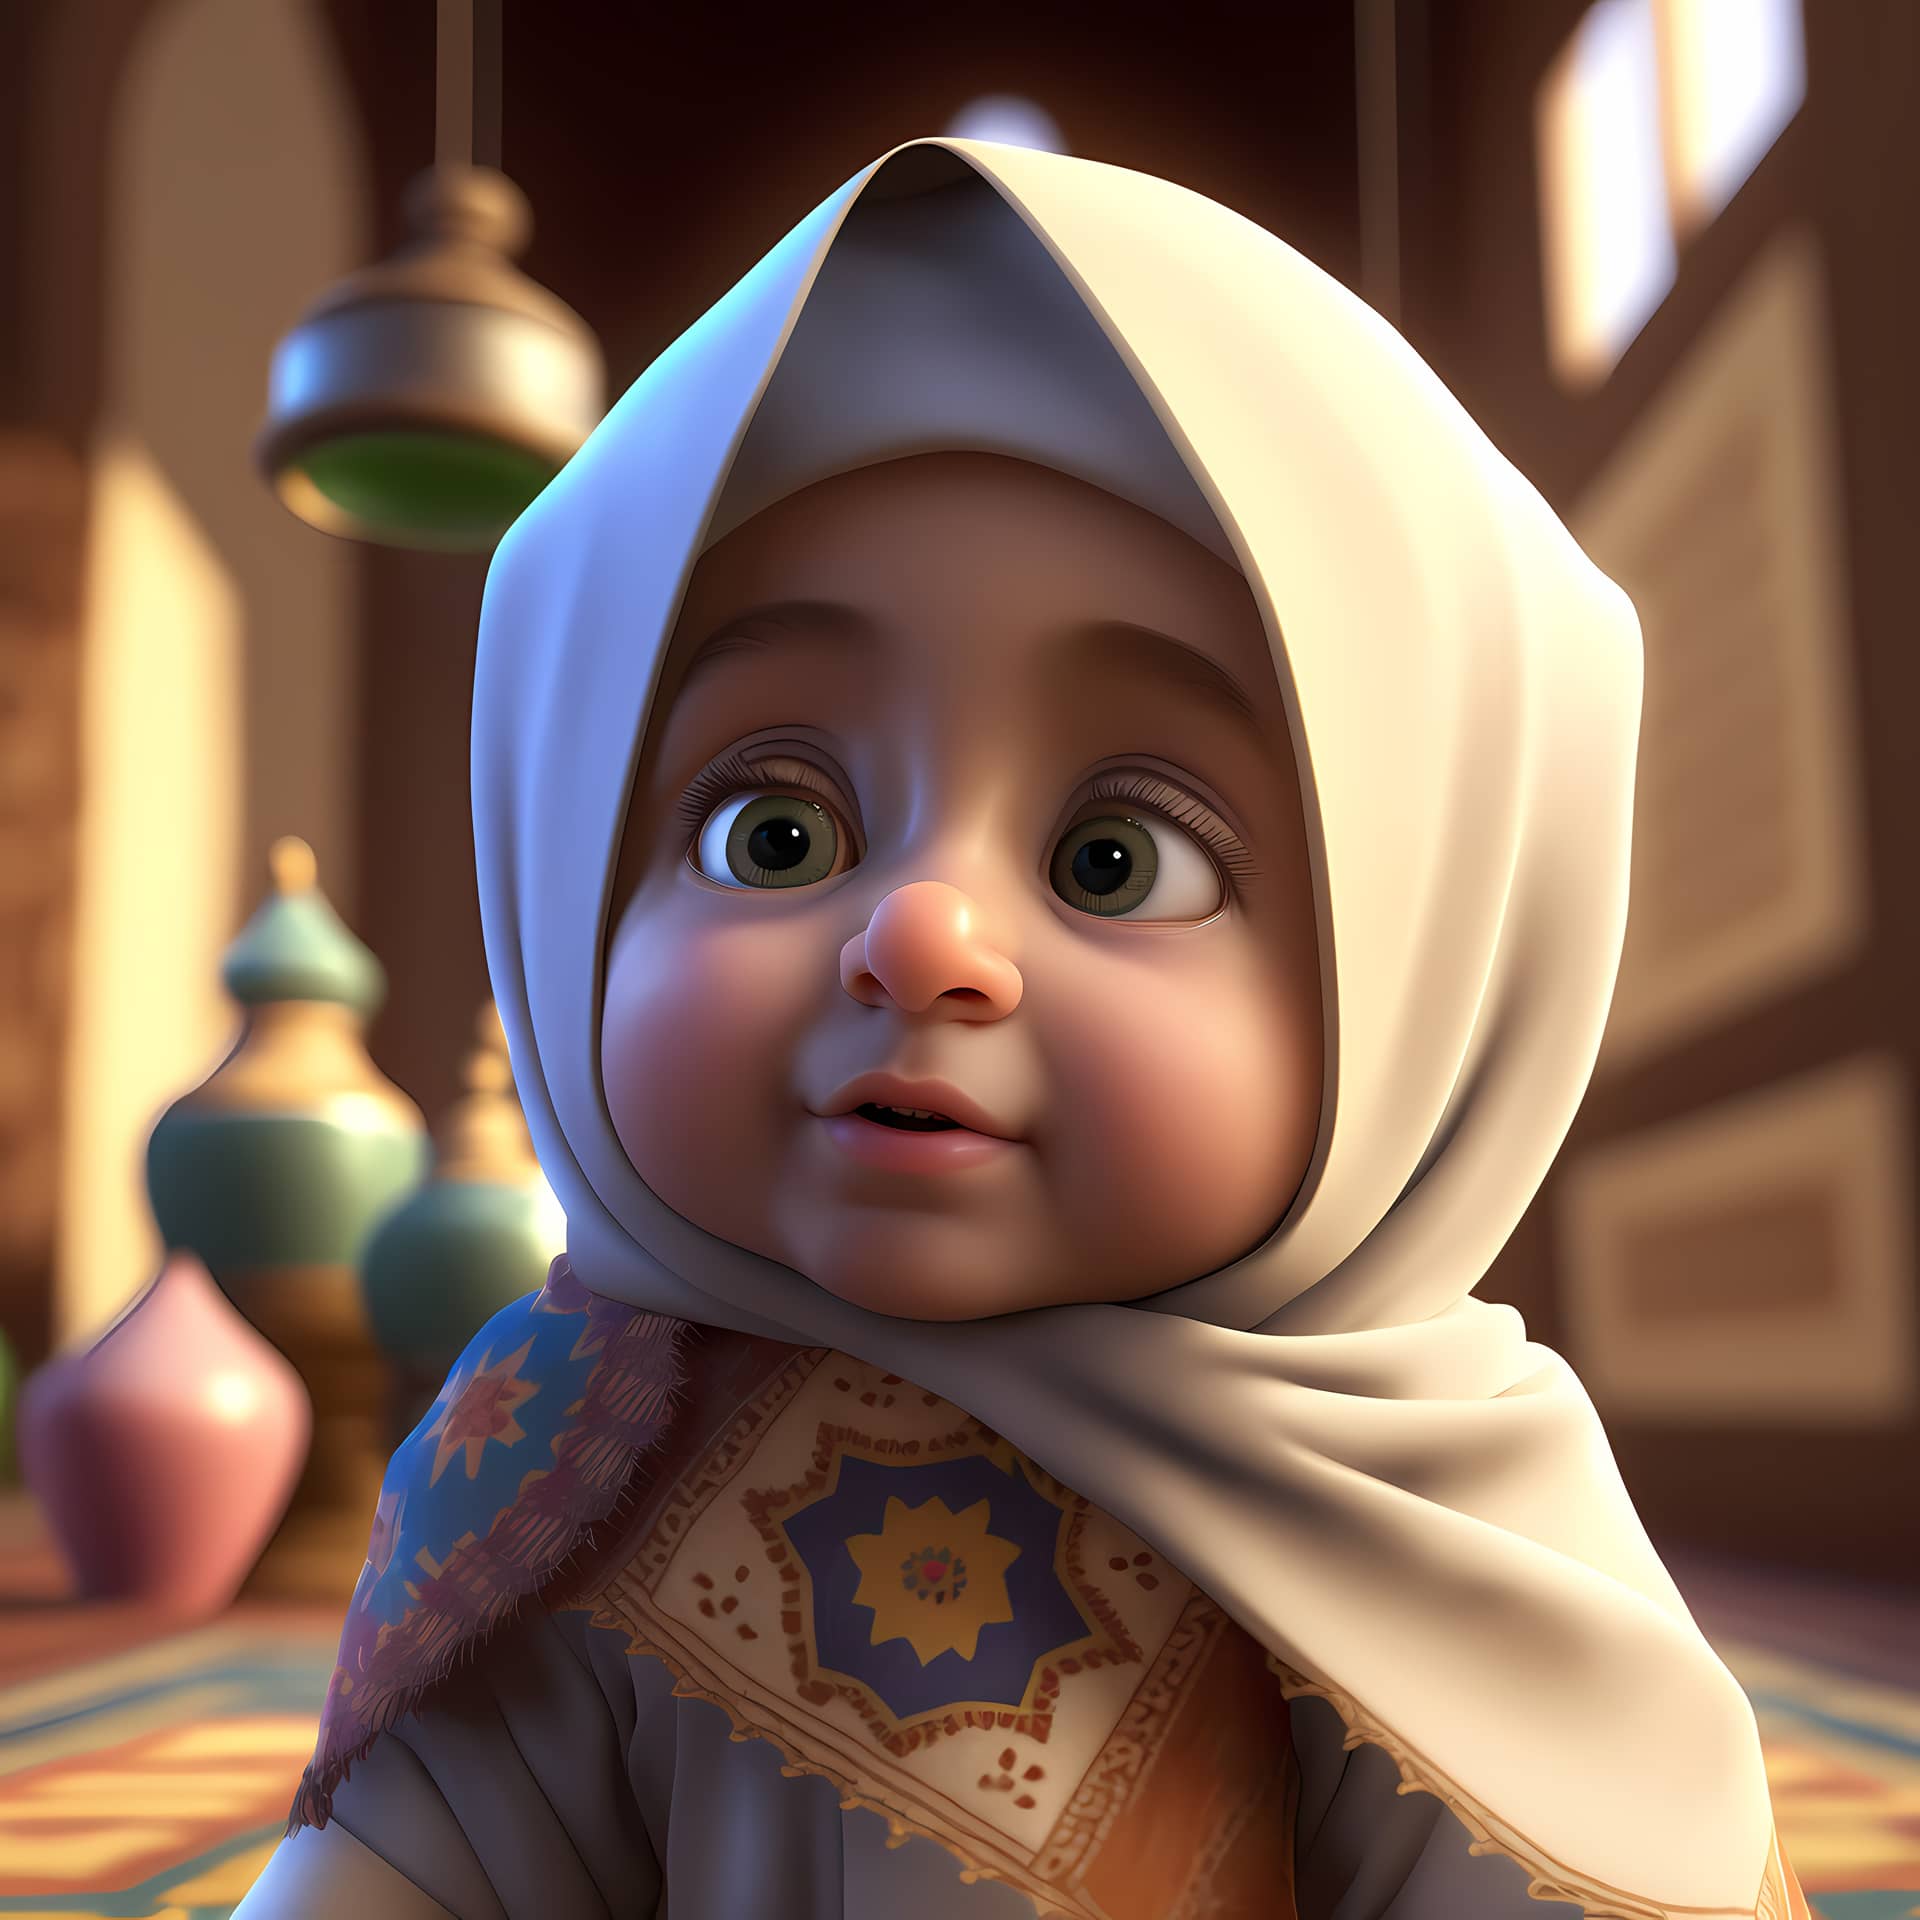 Adorable cute muslim children cartoon character 3d rendering balanced image